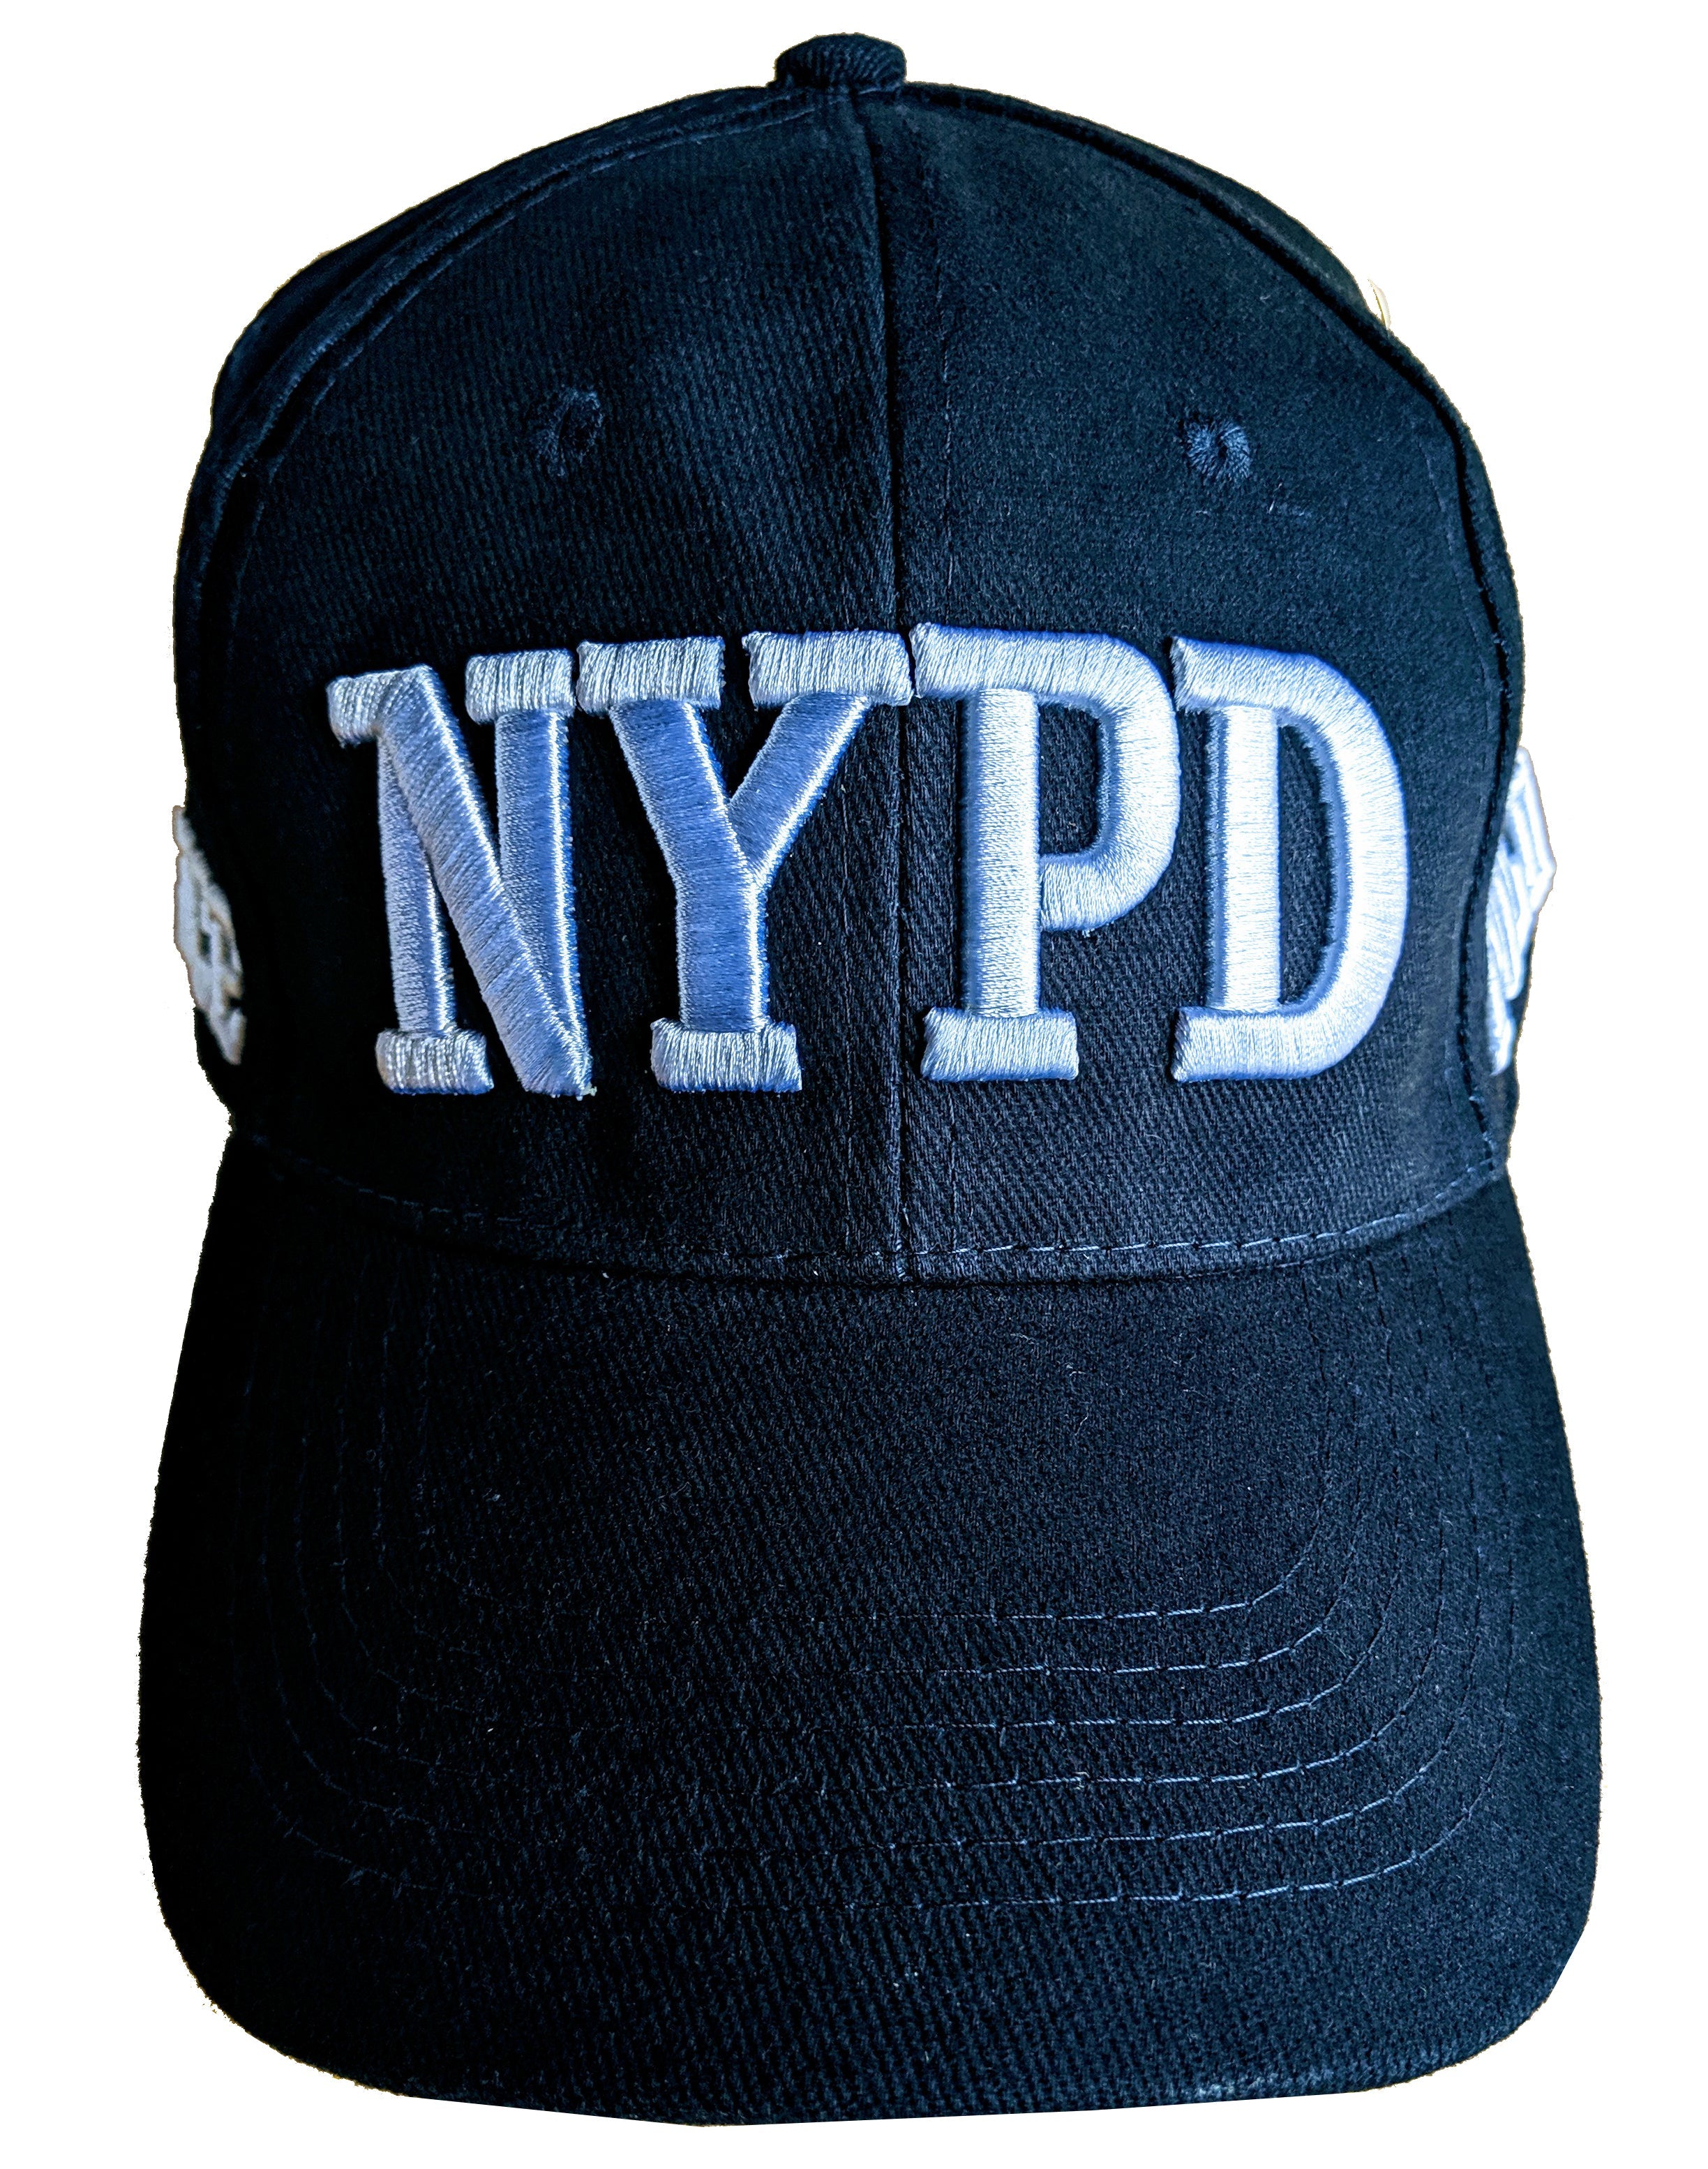 NYPD BASEBALL HAT